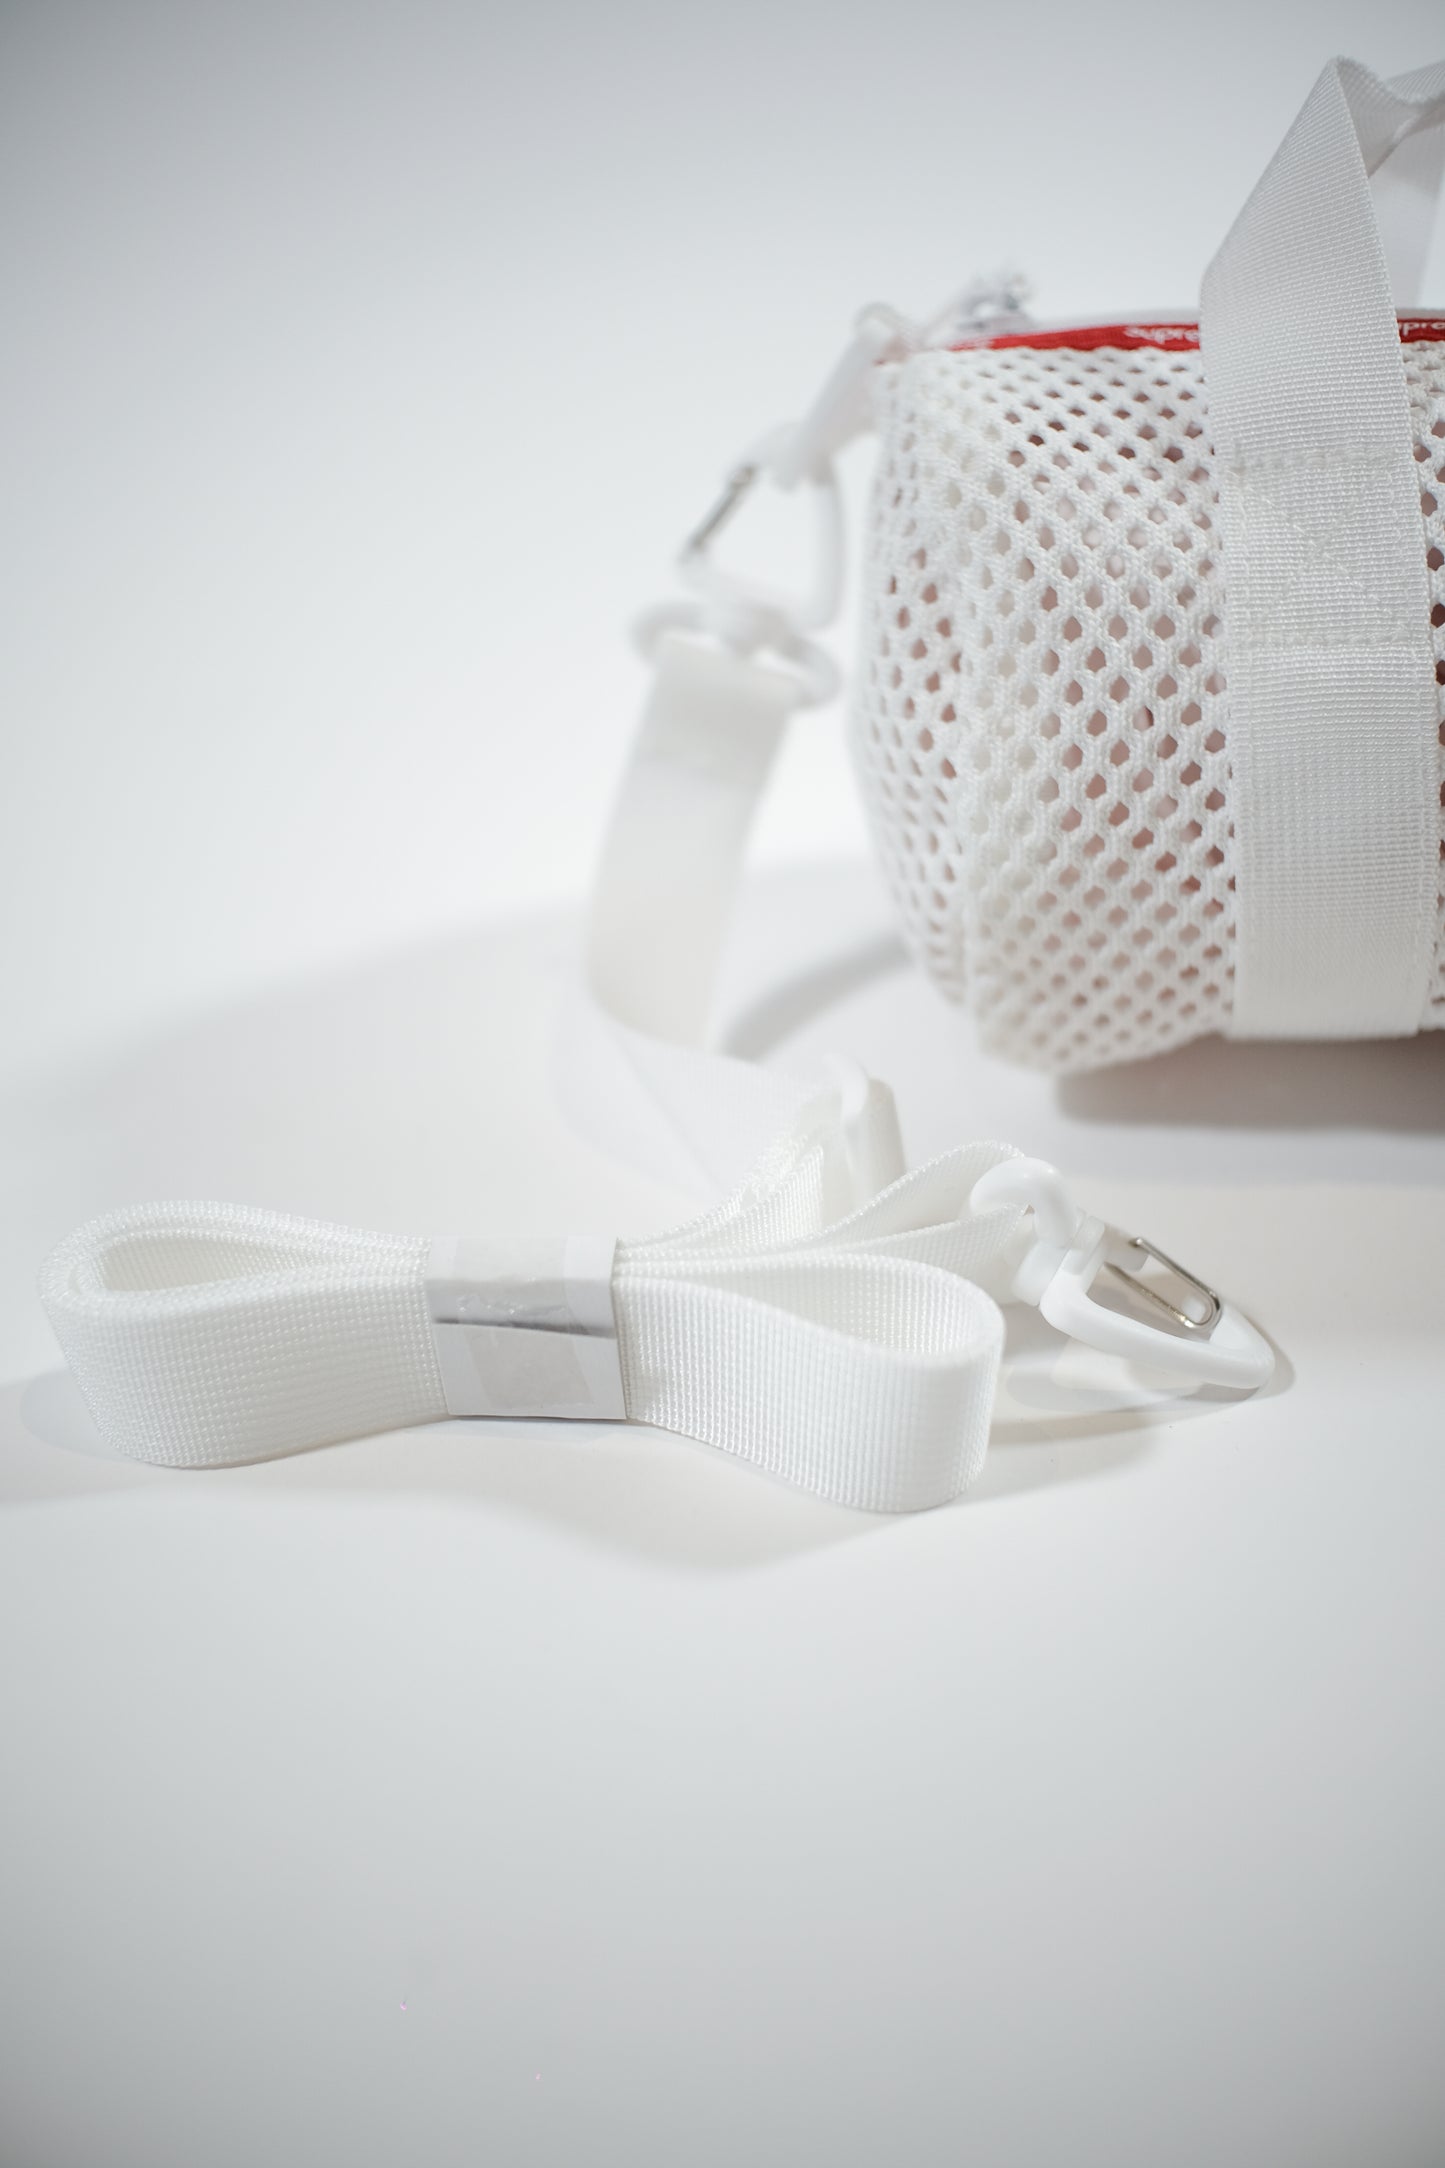 Supreme mesh mini duffle bag White